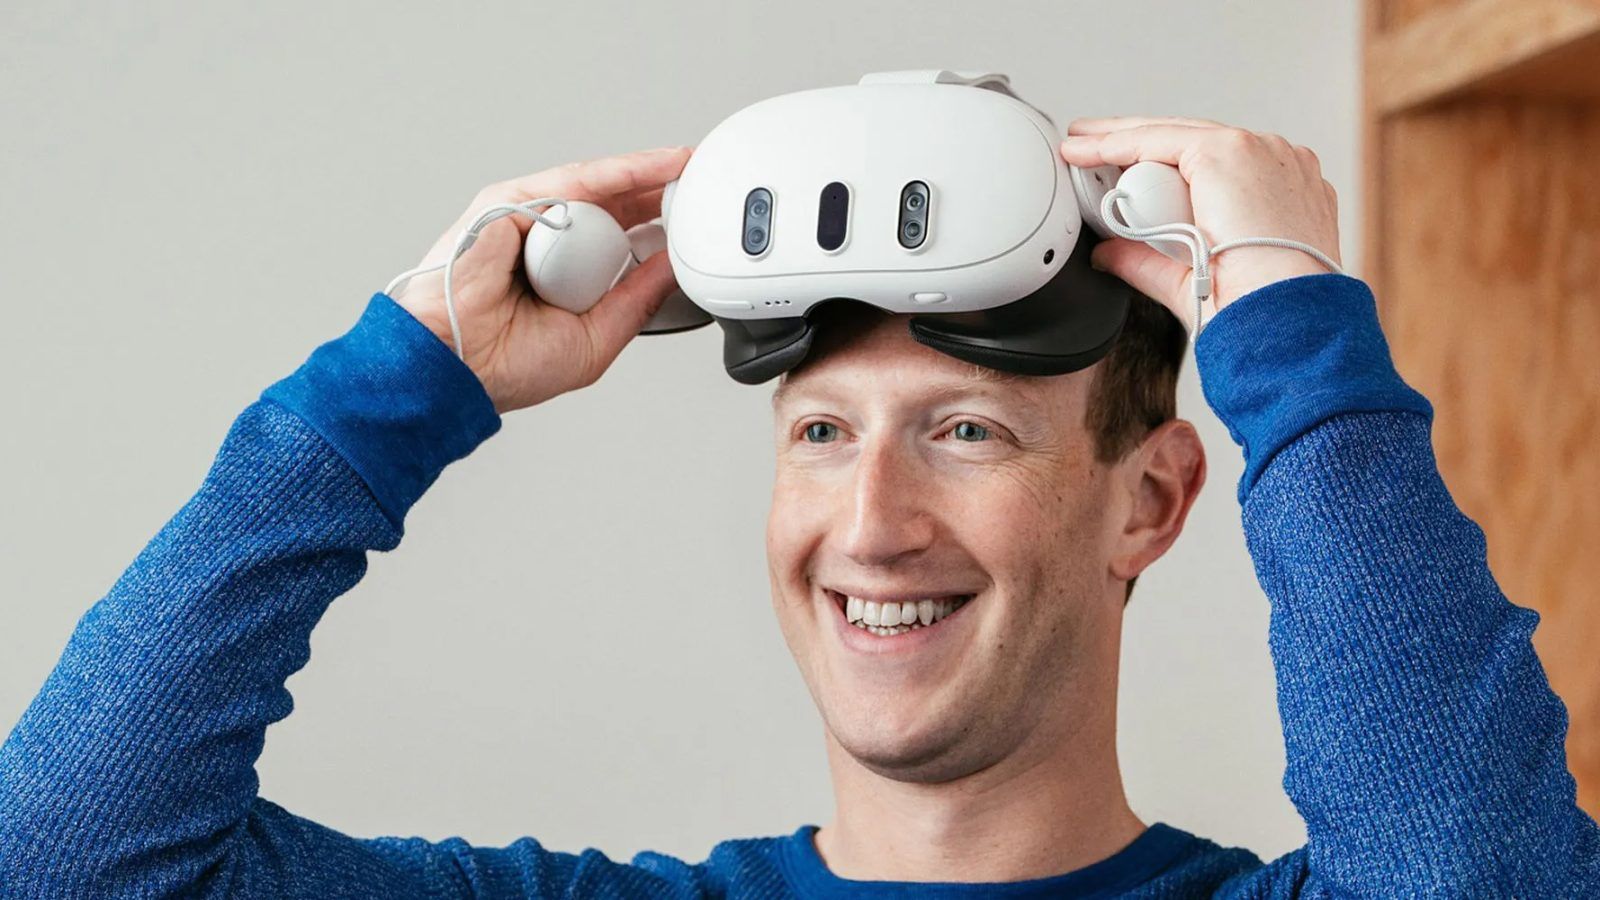 Mark Zuckerberg Calls META's Quest 3 the "Better Product"